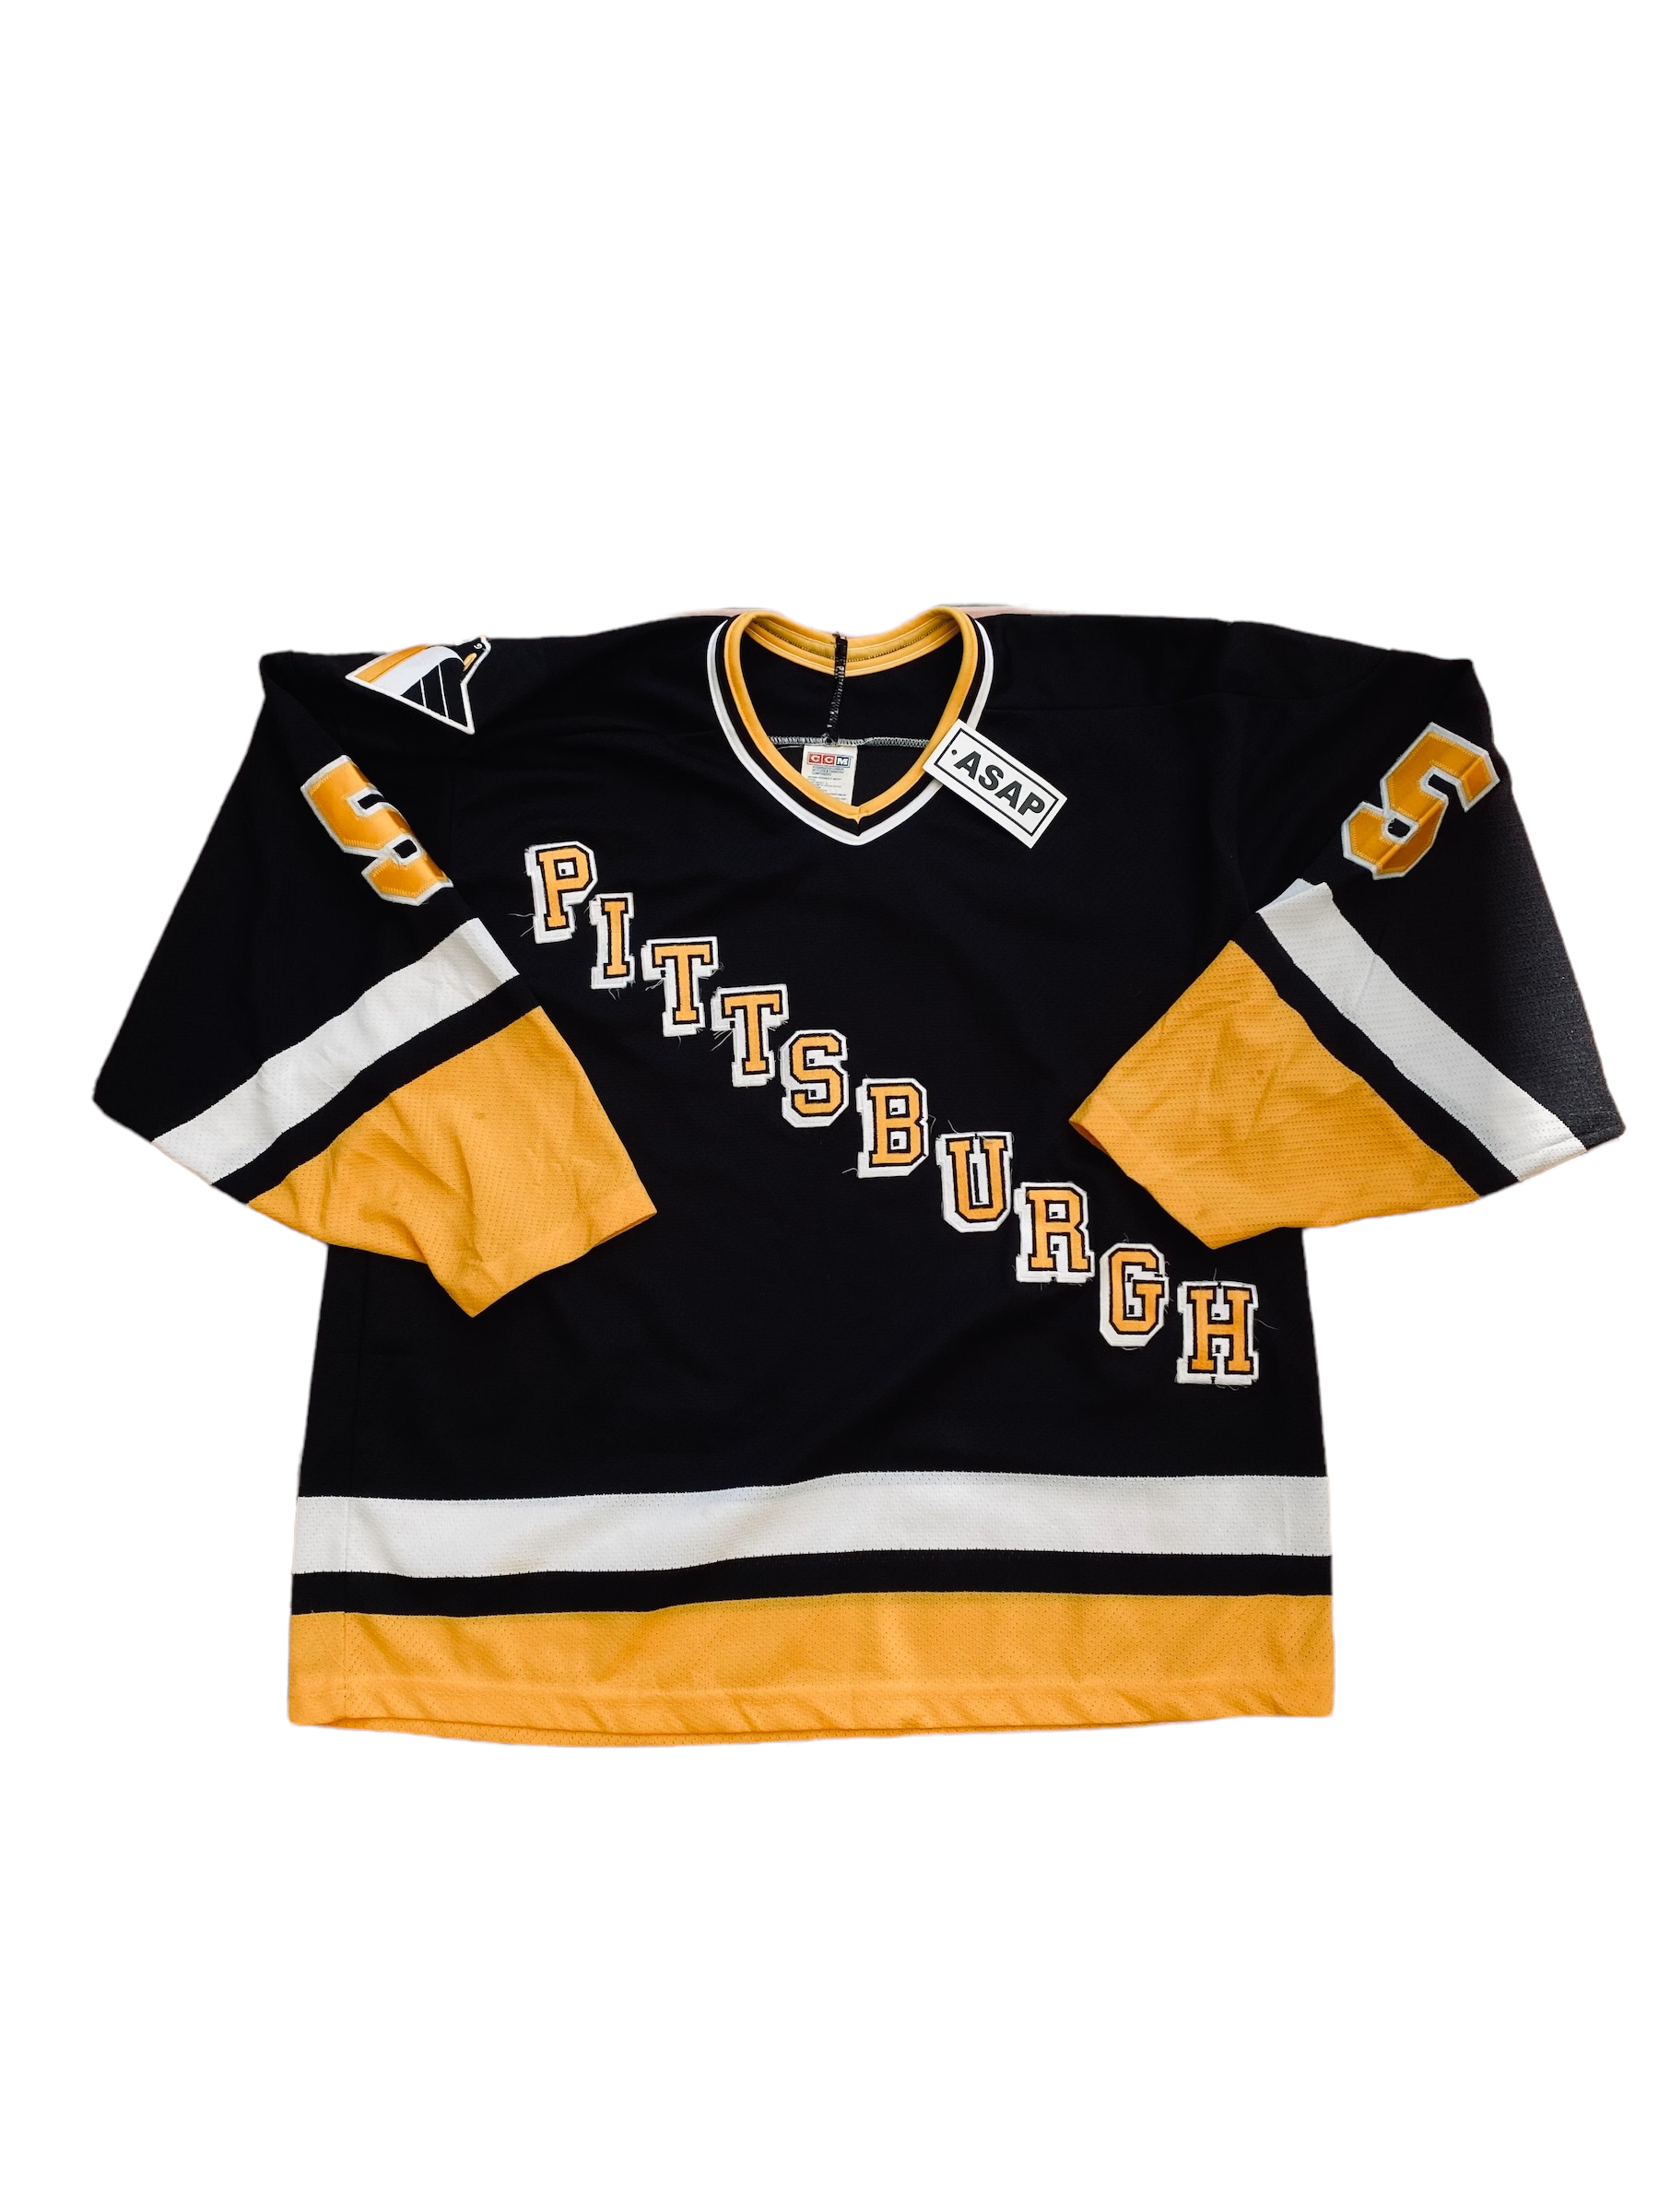 Lostboysvintage Vintage 1990s Pittsburgh Penguins NHL Hockey Jersey / Sportswear / Color Block / Athleisure / Streetwear / Eastern Conference